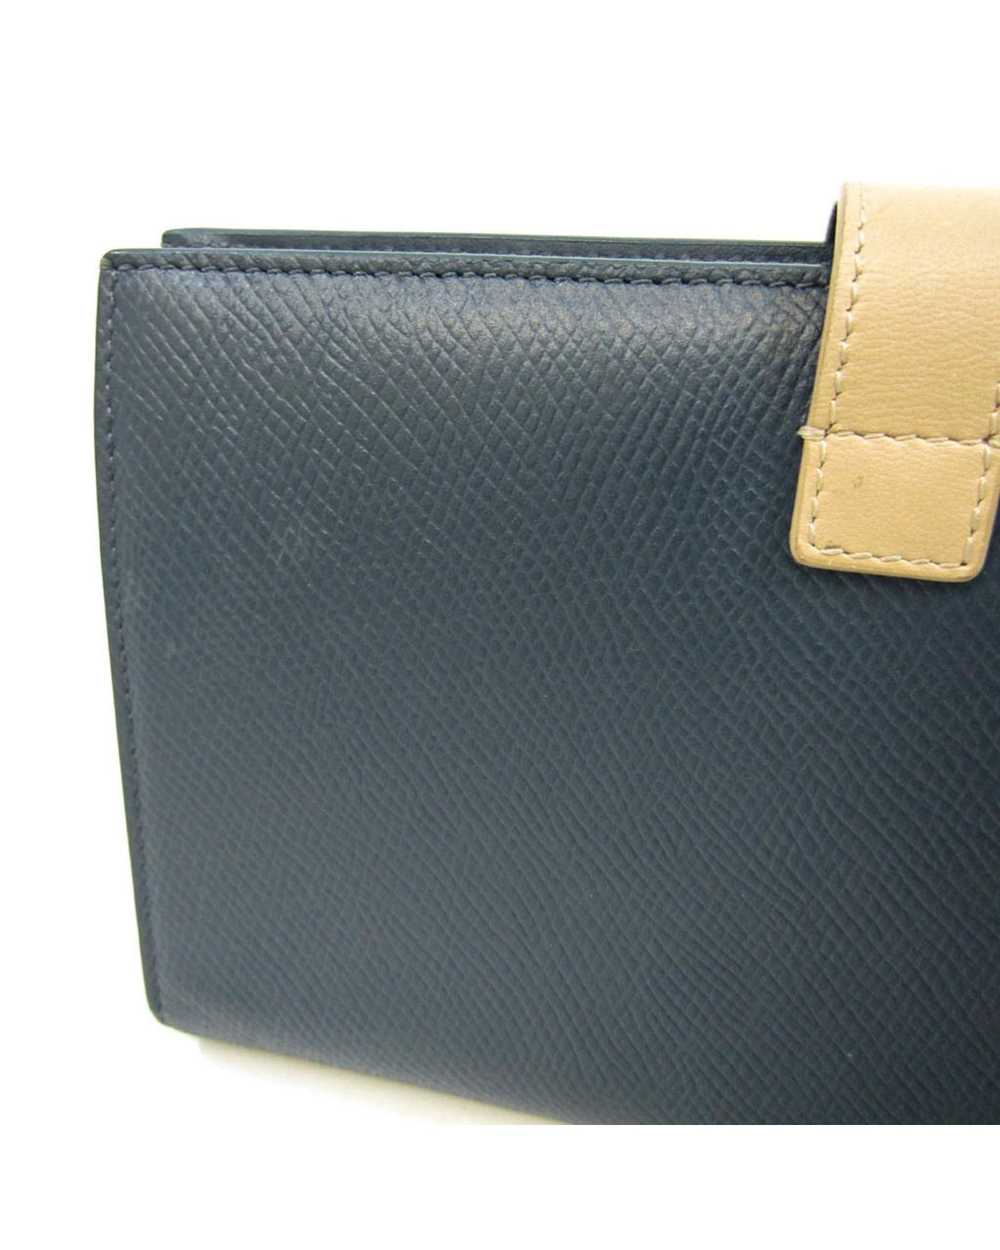 Celine Navy Leather Wallet - Practical and Elegant - image 6